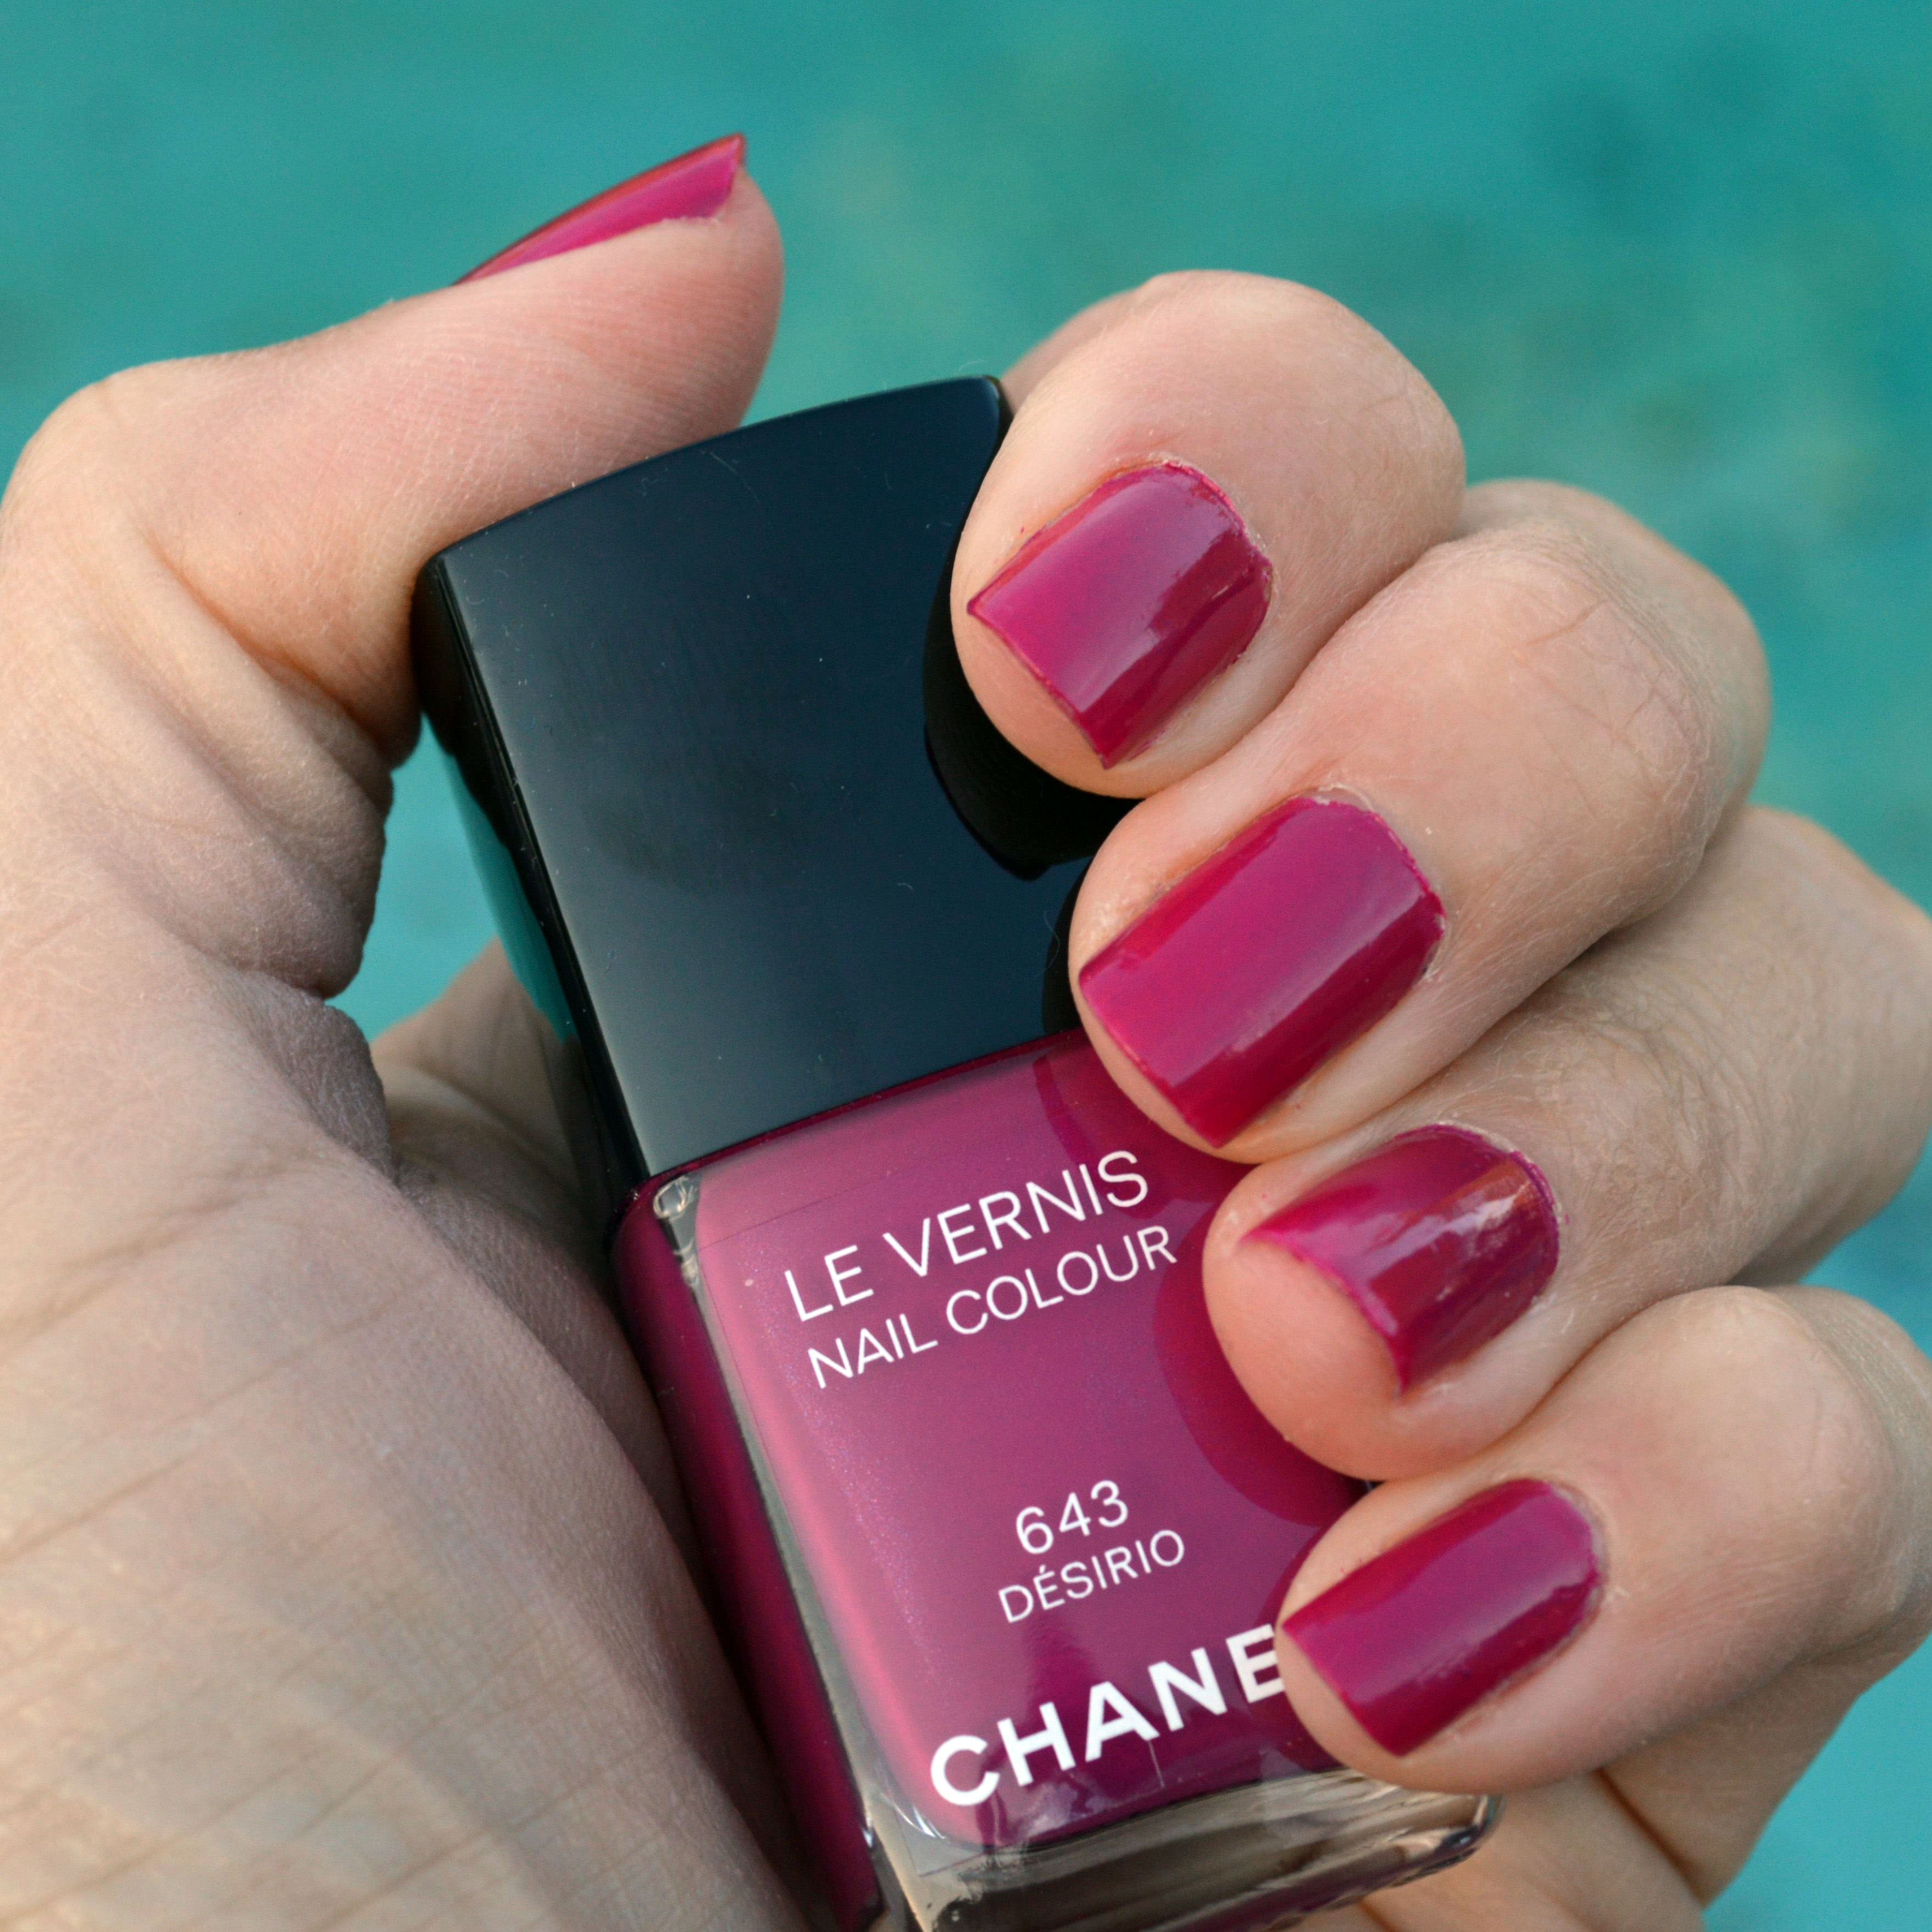 Chanel Desirio nail polish spring 2015 review Bay Area Fashionista